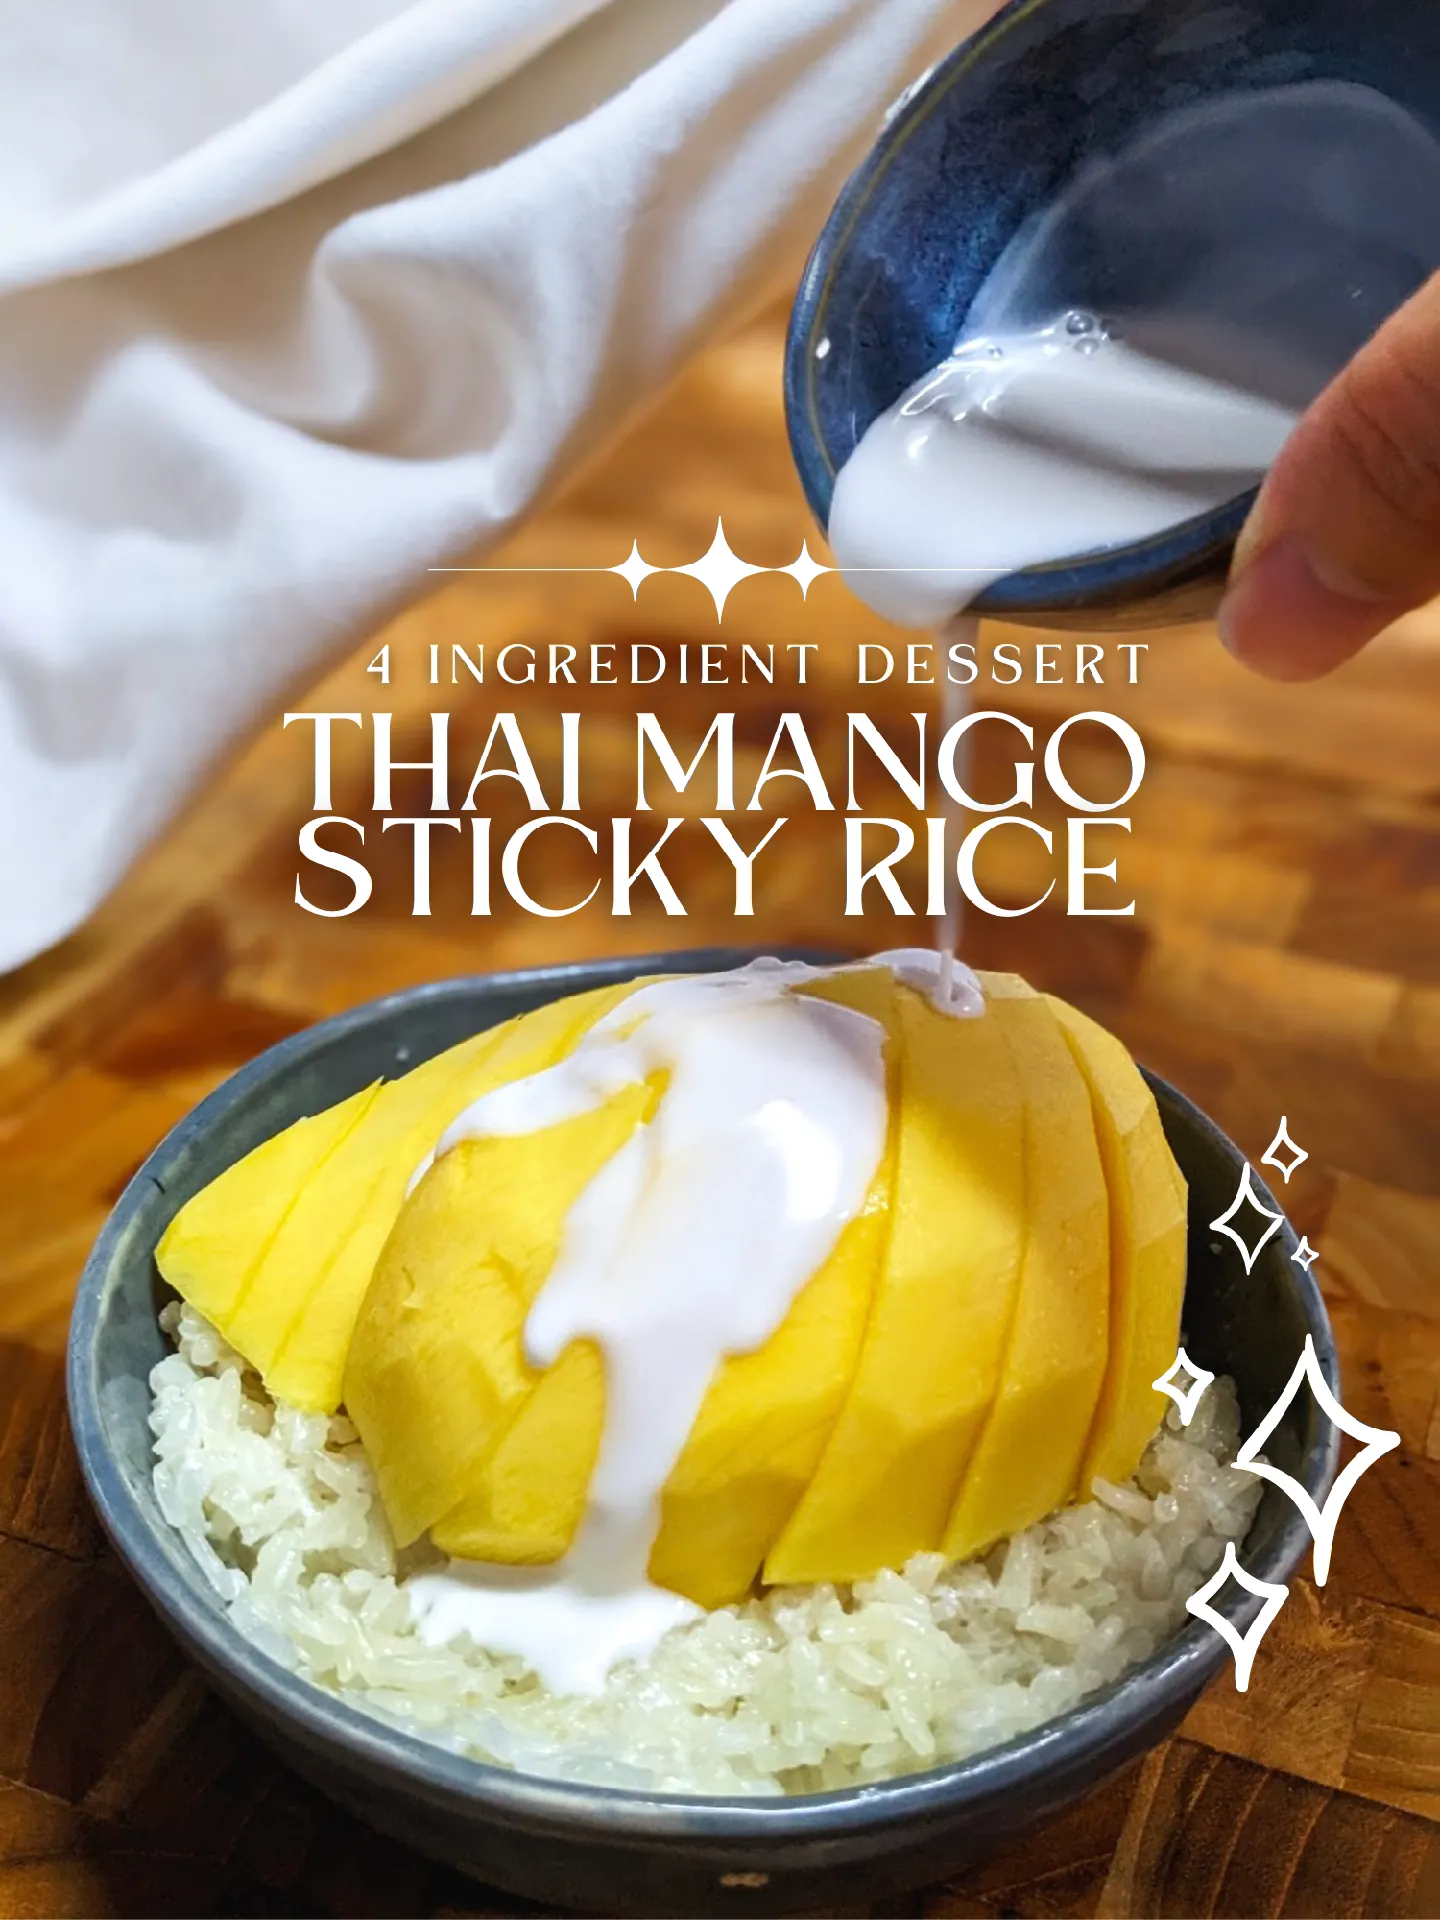 Mango Sticky Rice Thai Dessert - Oh My Food Recipes